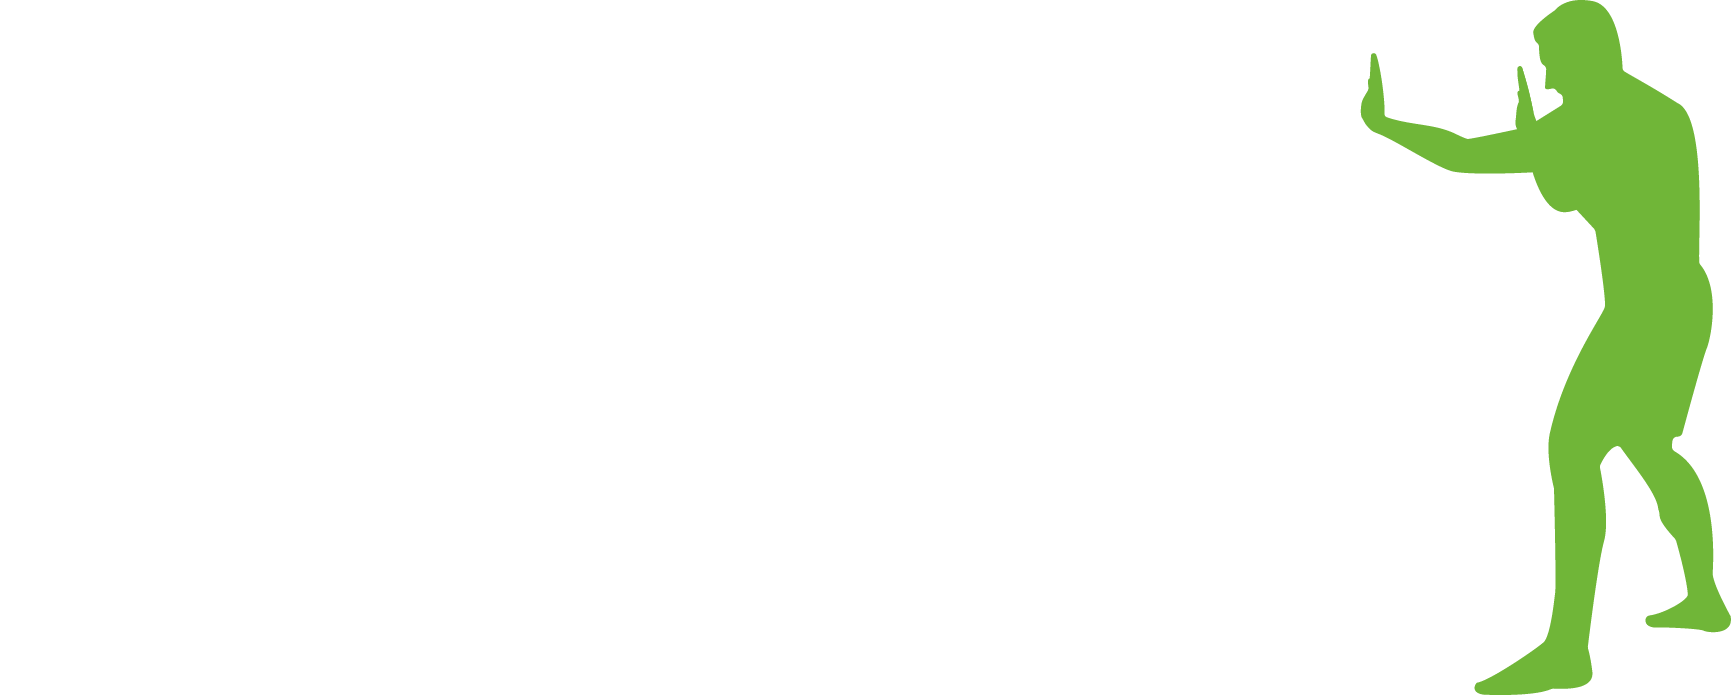 Logo Strongline Academy